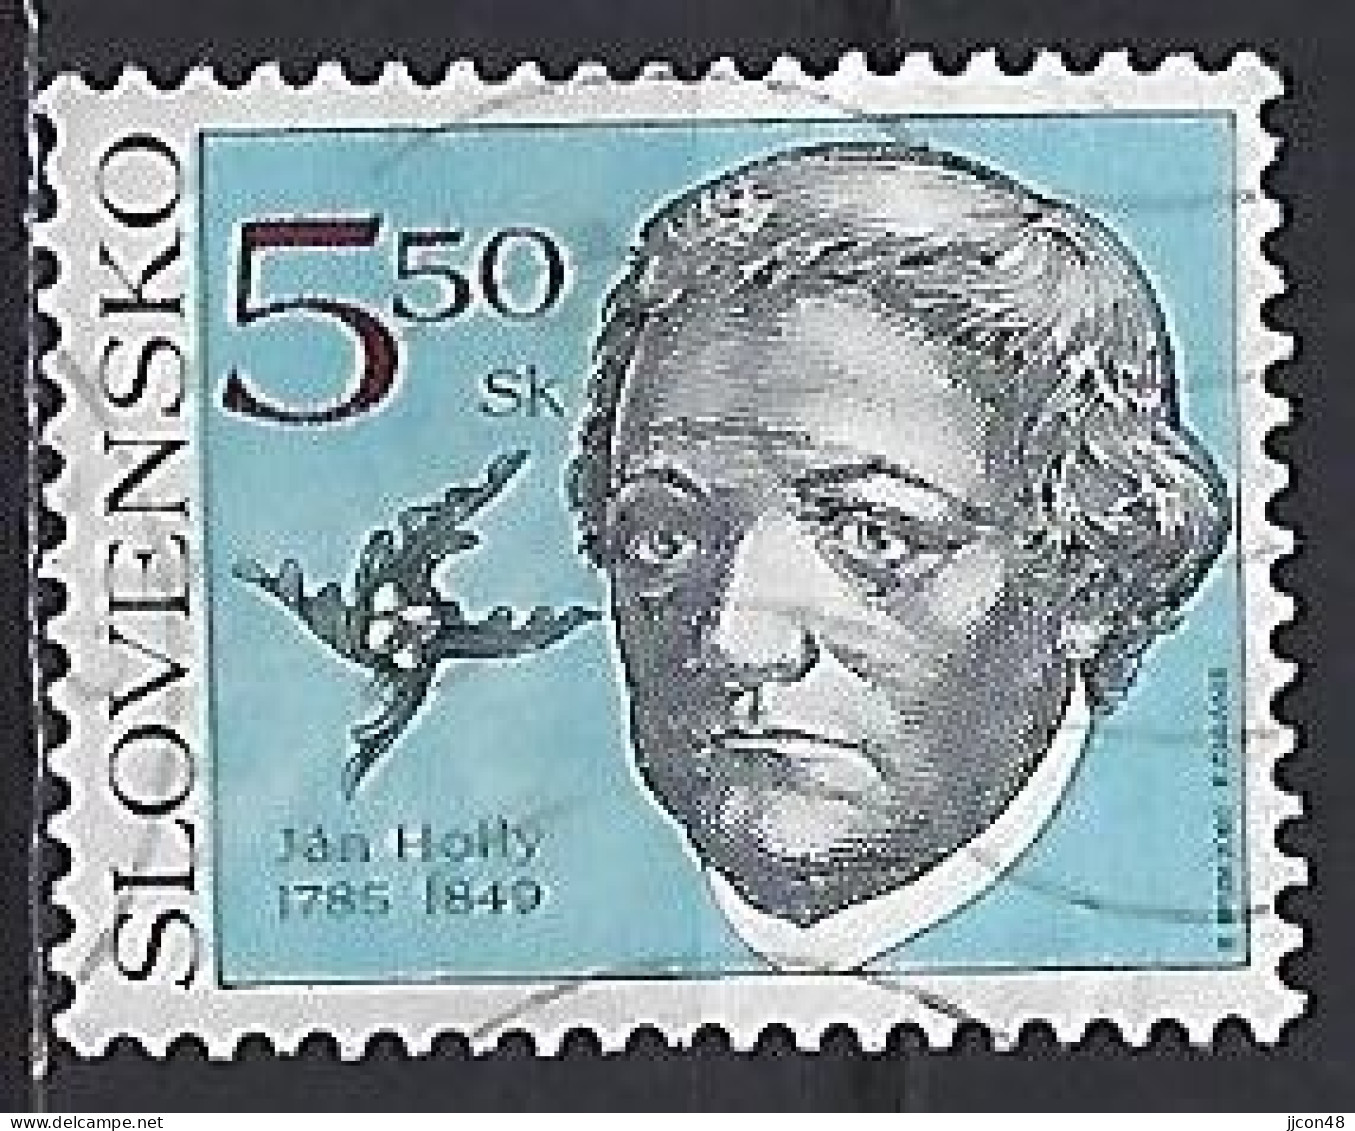 Slovakia 2000  Jan Holly (o) Mi.367 - Used Stamps